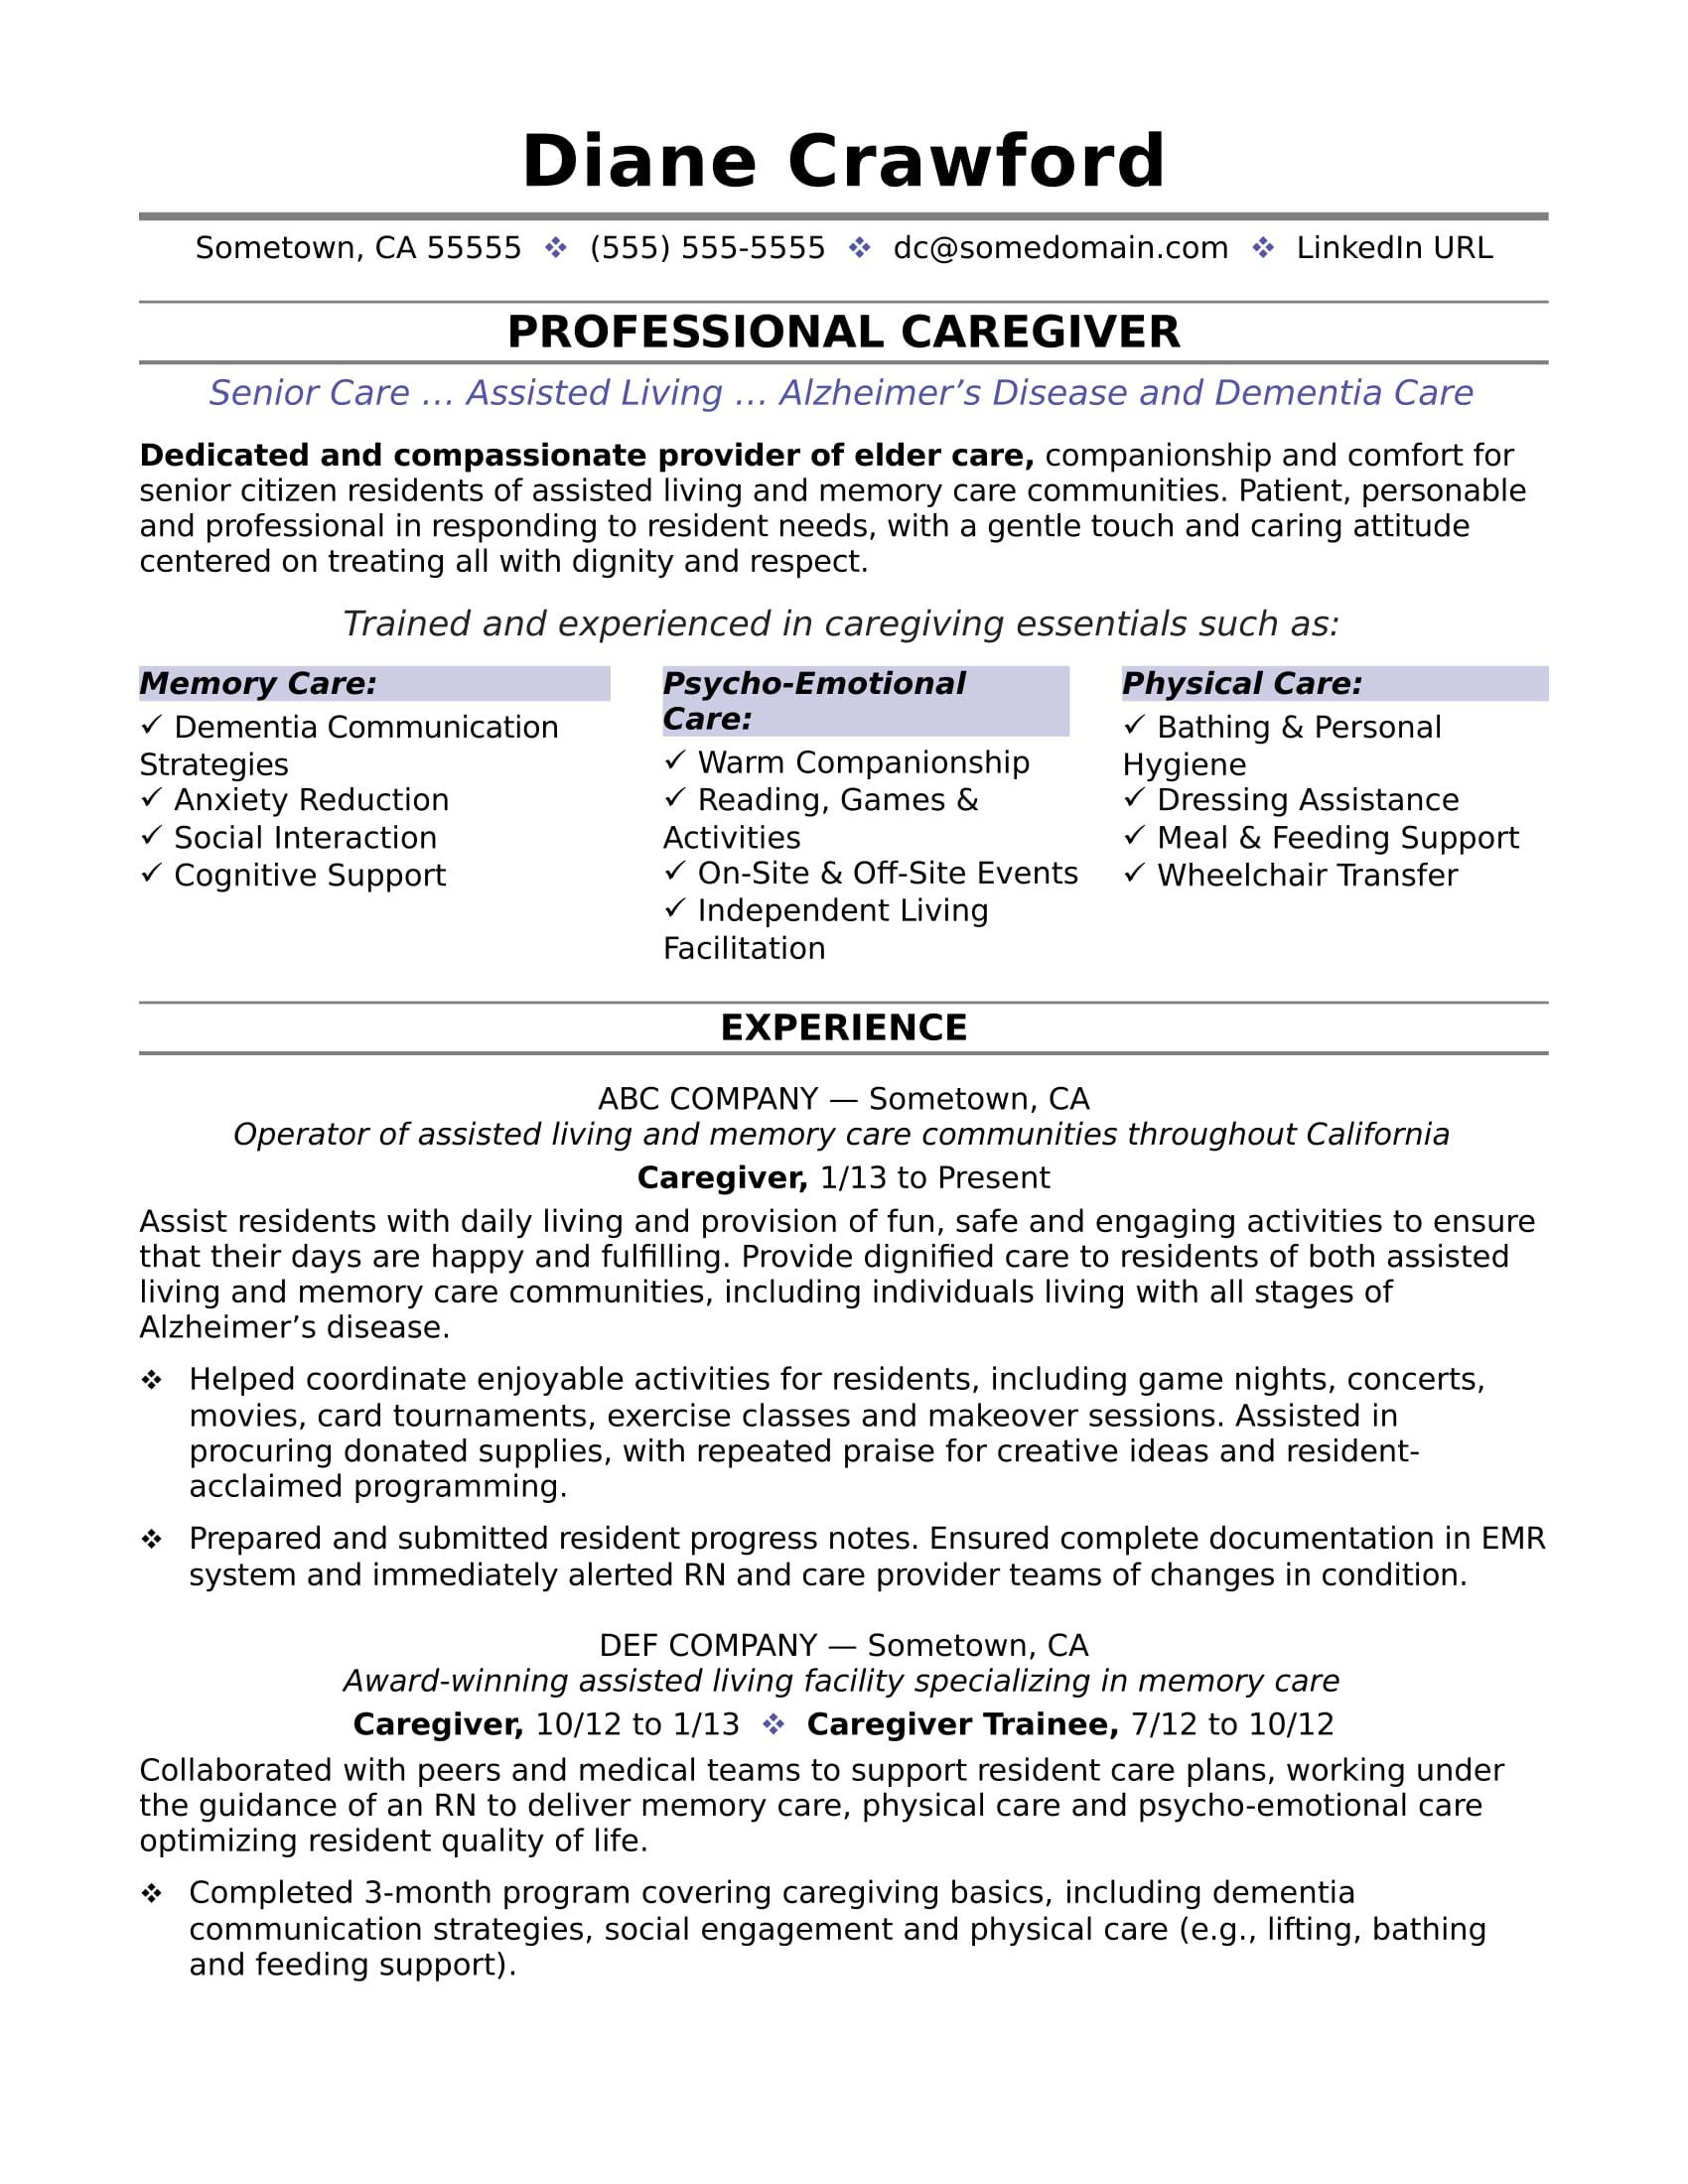 Sample Of Home assited Living Resume Caregiver Resume Monster.com